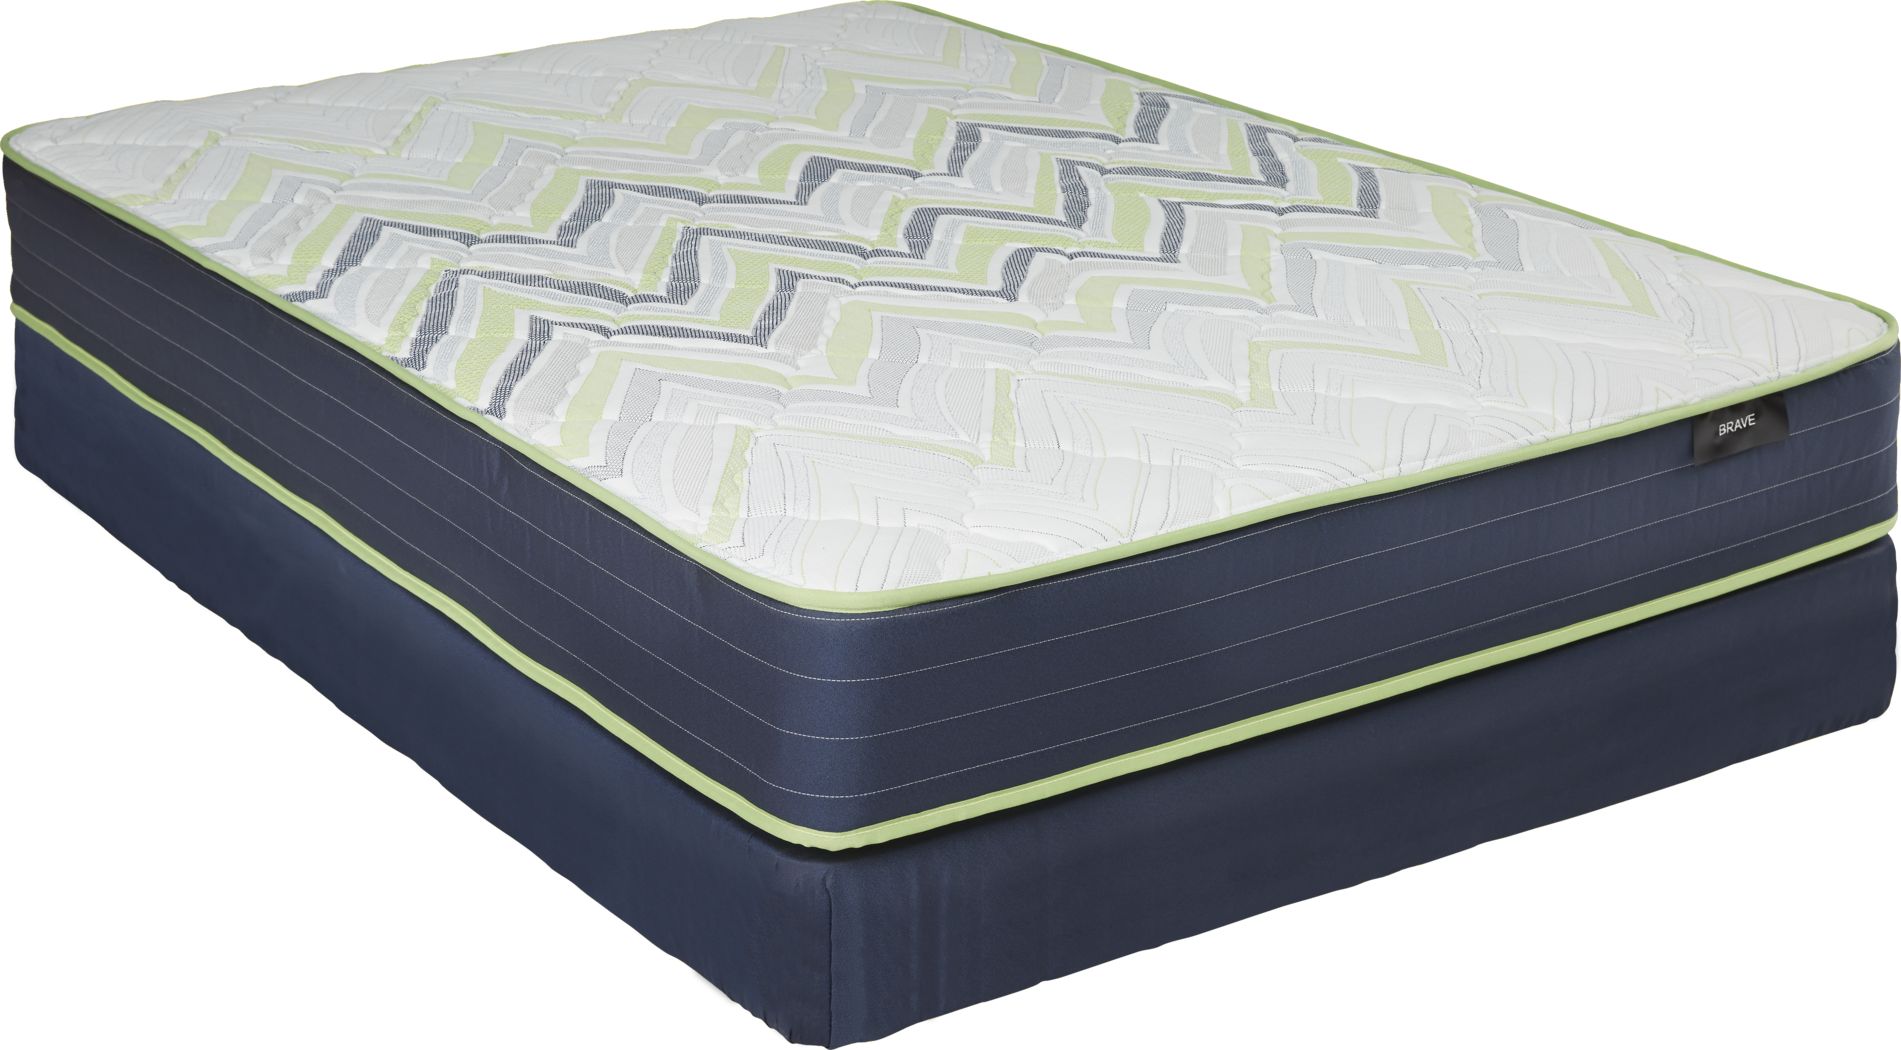 sleeping beauty advantage king mattress